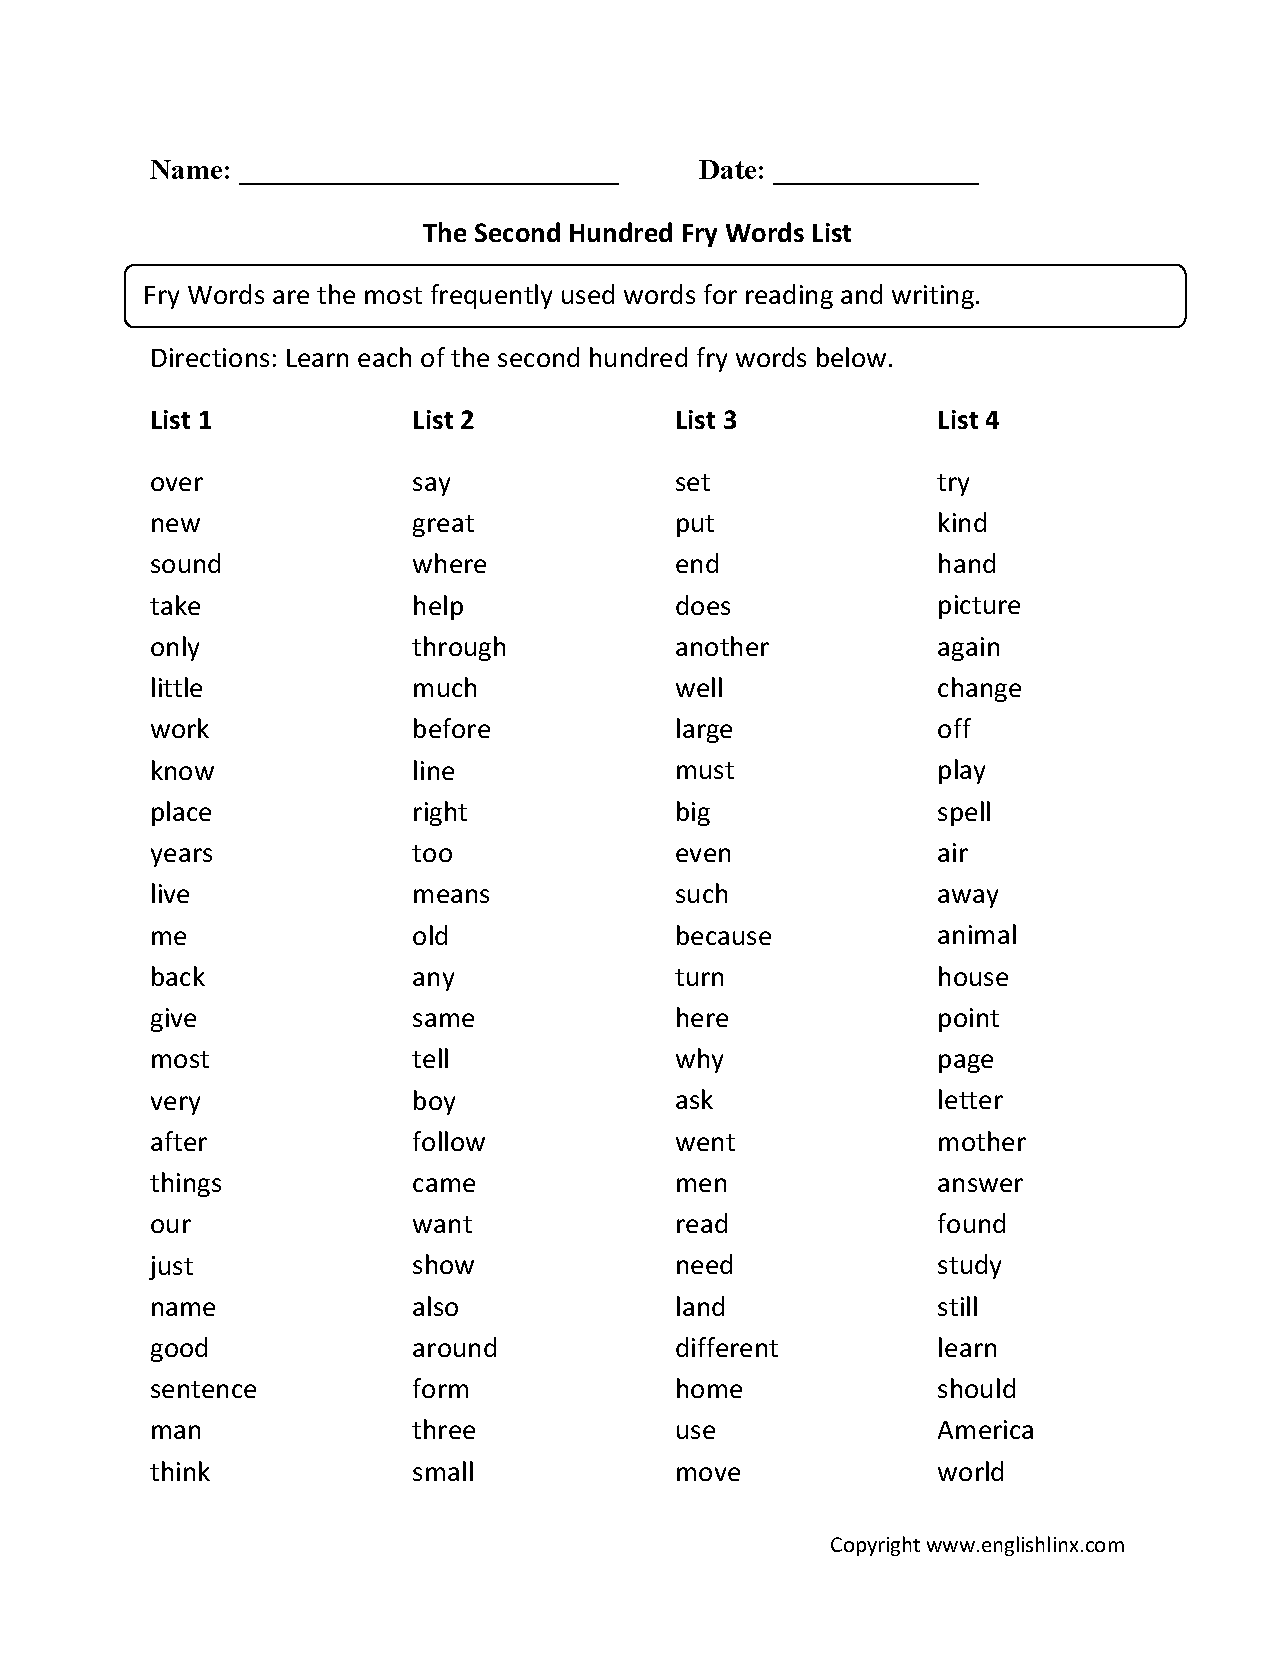 fry-words-worksheets-second-hundred-fry-words-list-worksheets